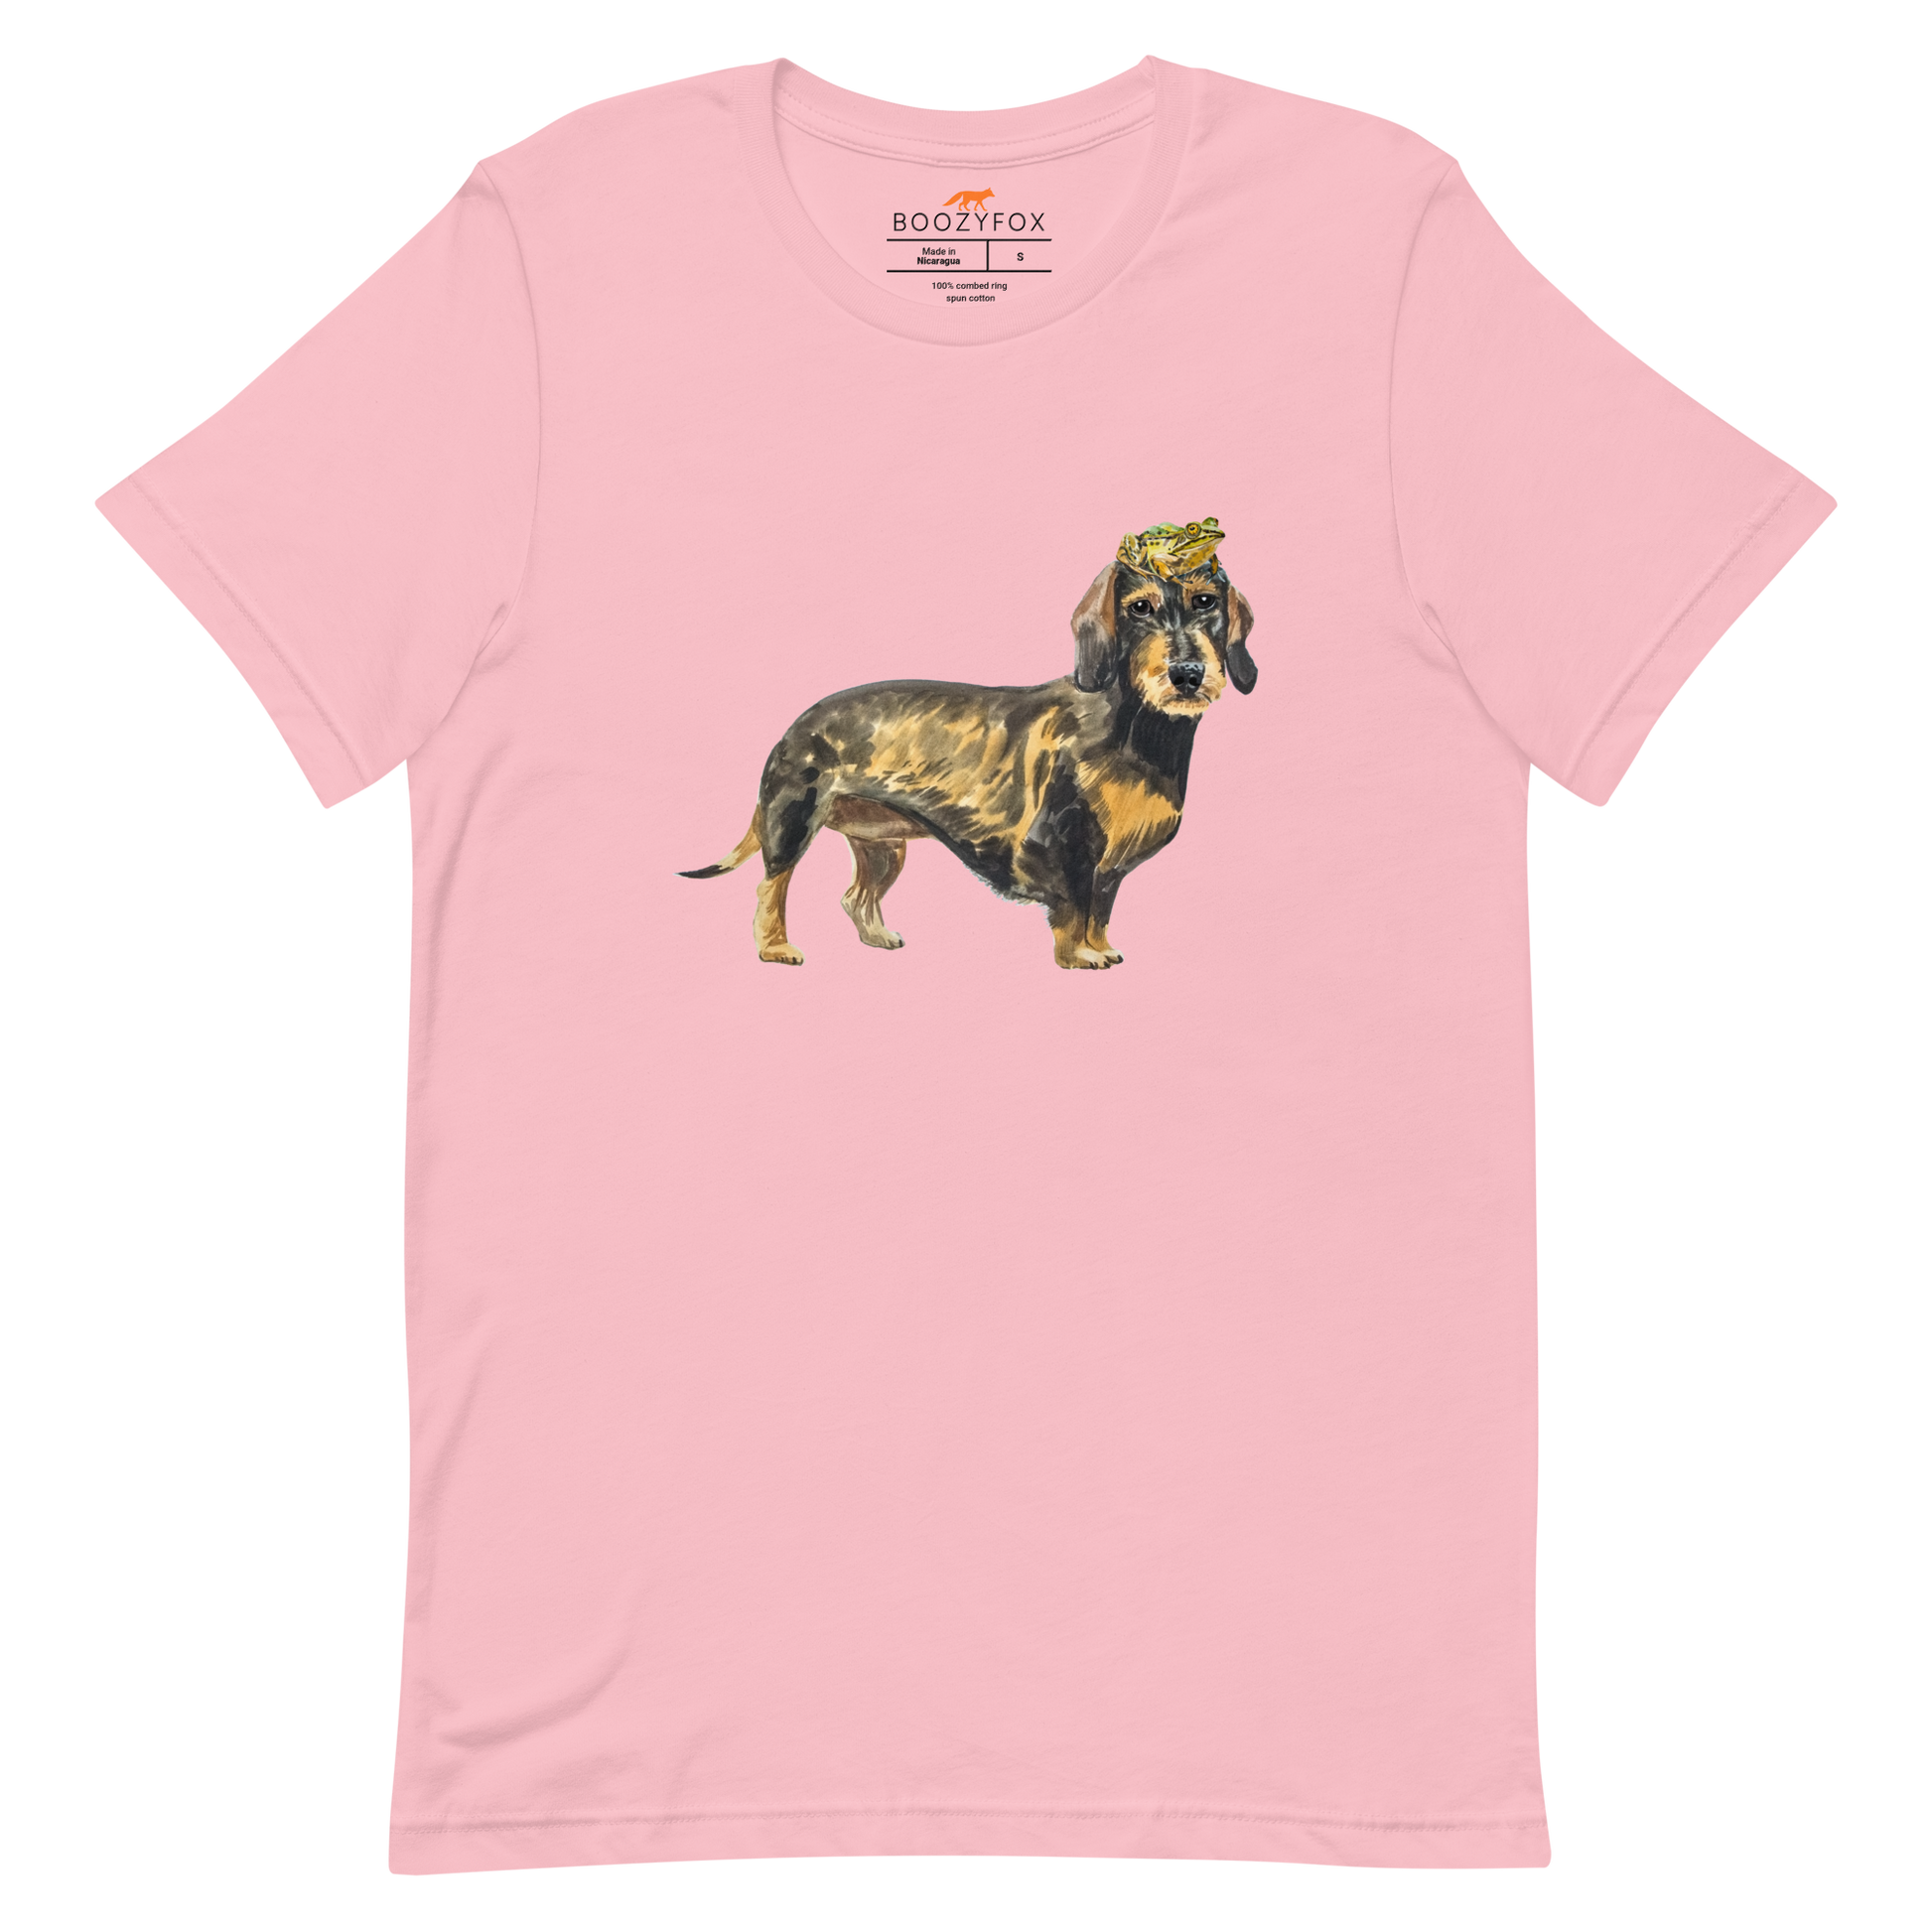 Pink Premium Dachshund T-Shirt featuring an adorable Frog on a Dachshund's Head graphic on the chest - Cute Graphic Dachshund Tees - Boozy Fox